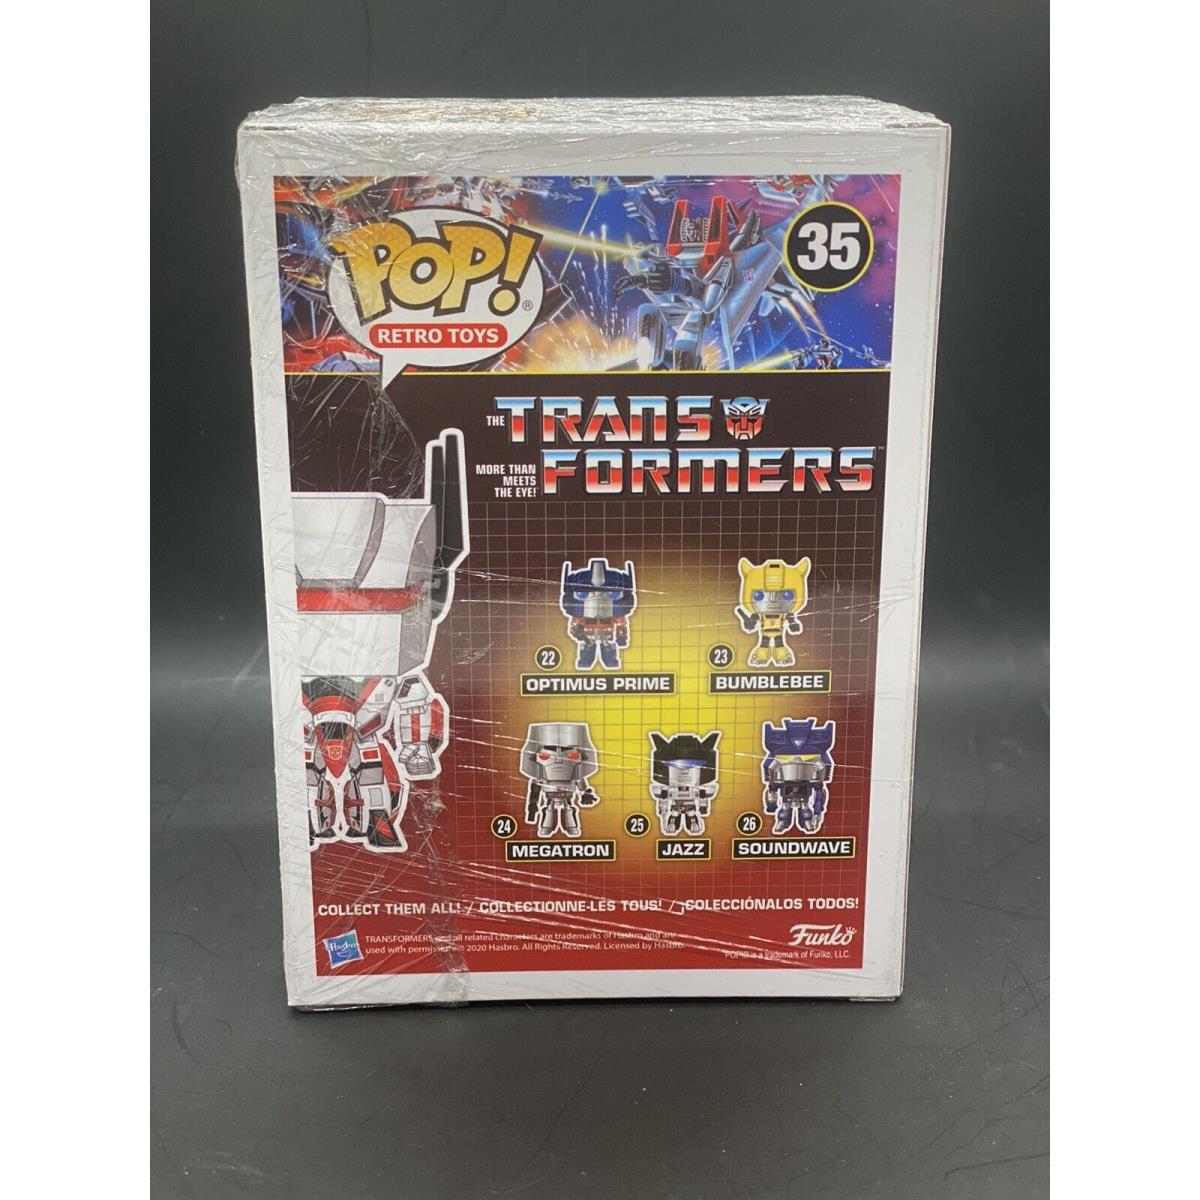 Funko Pop - Transformers Jetfire 35 Funko Exclusive Limited Edition Wrapped